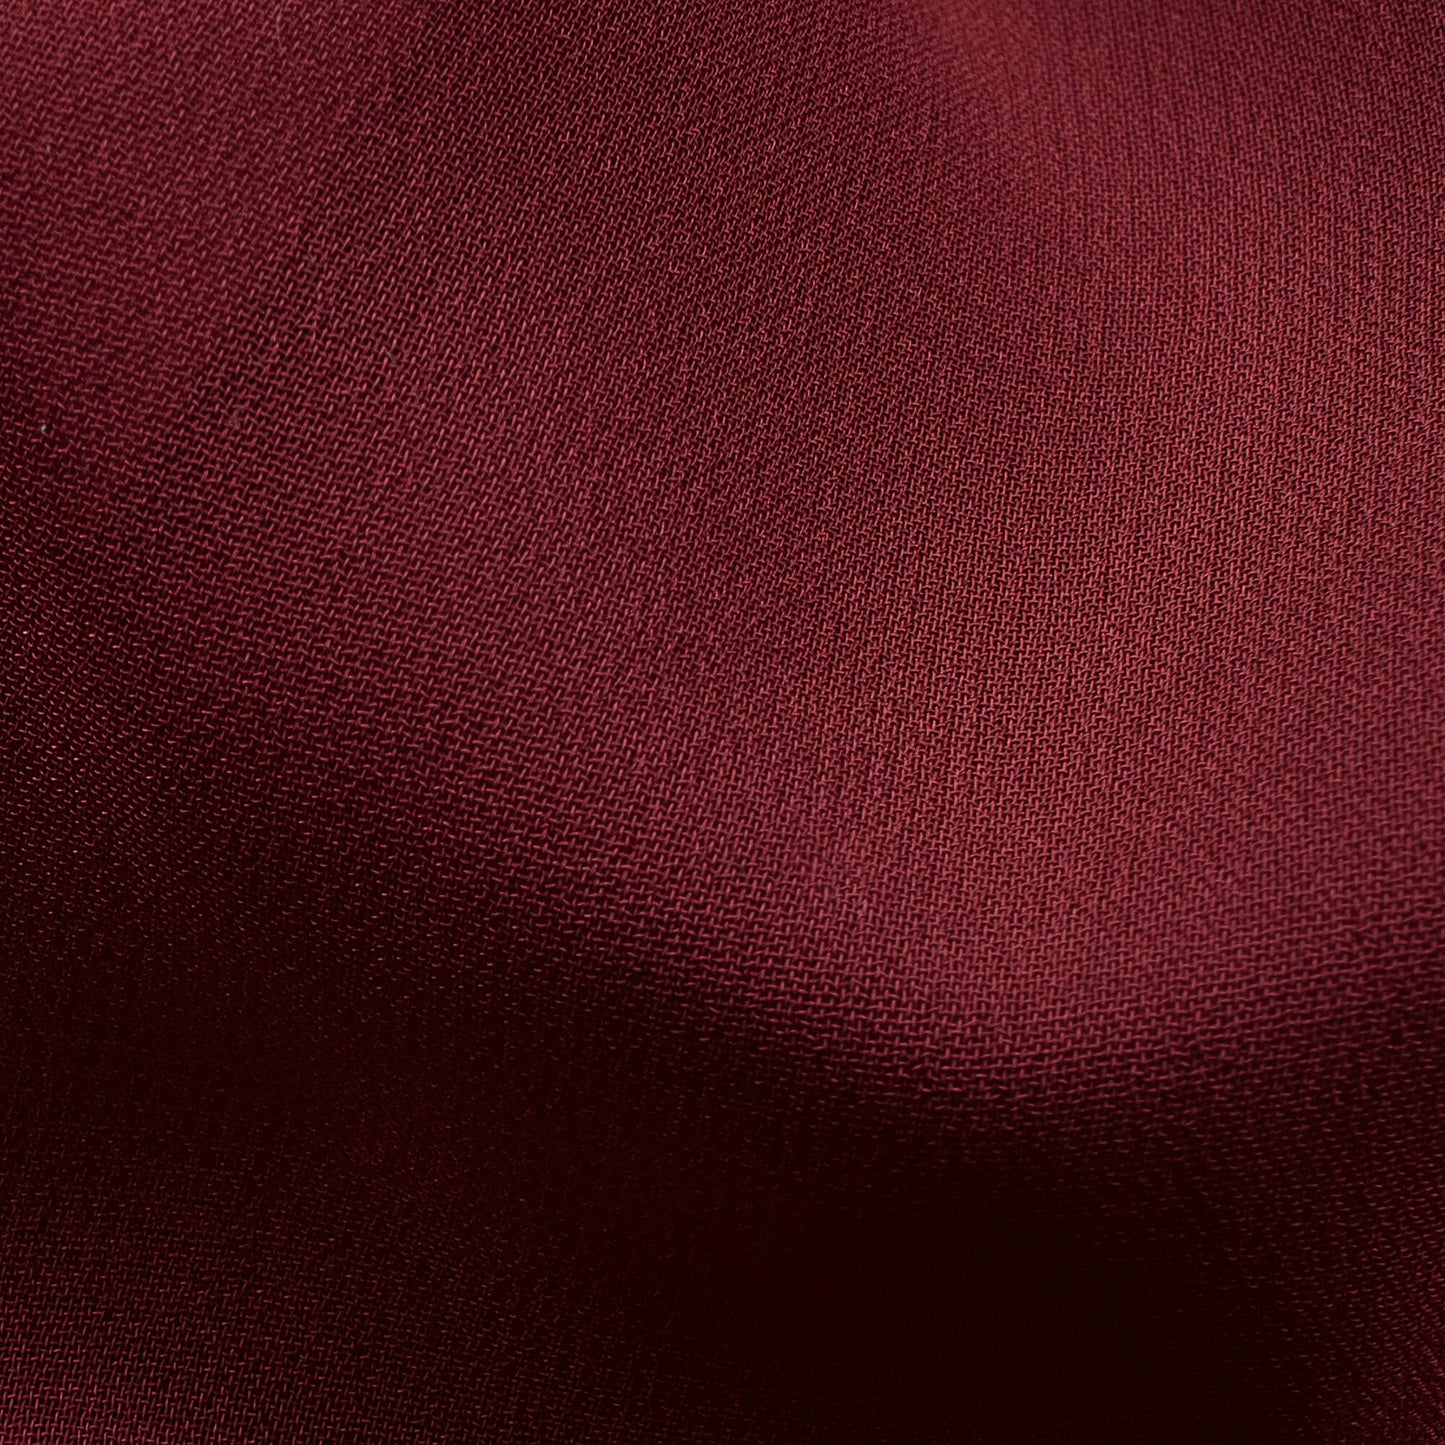 Maroon Plain Georgette Fabric